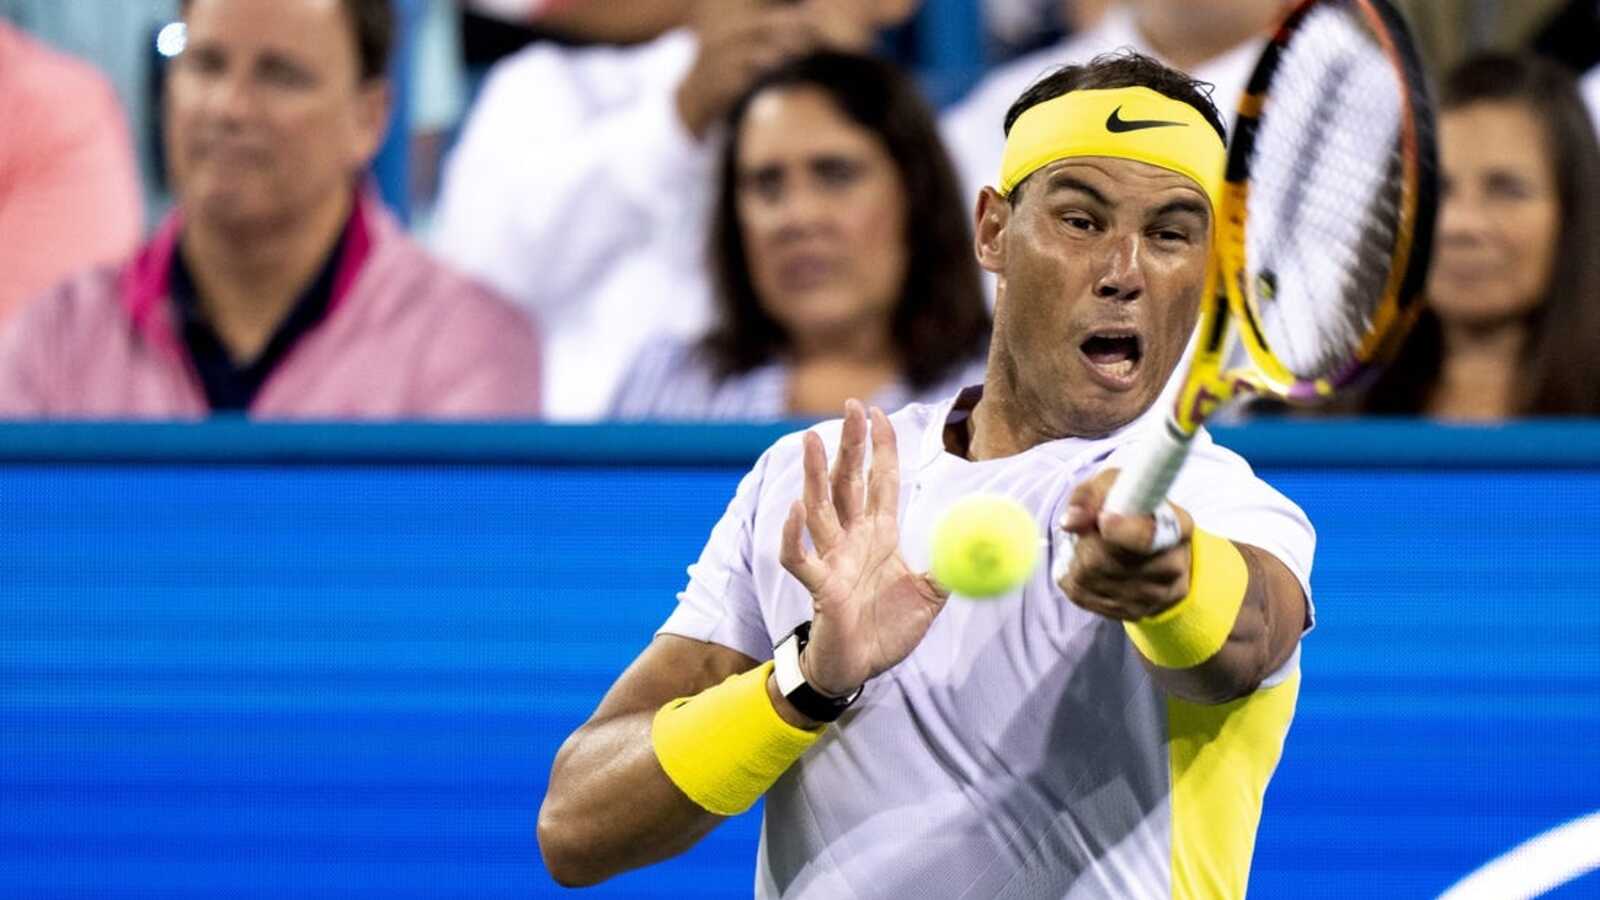 Rafael Nadal storms into quarterfinals at Madrid